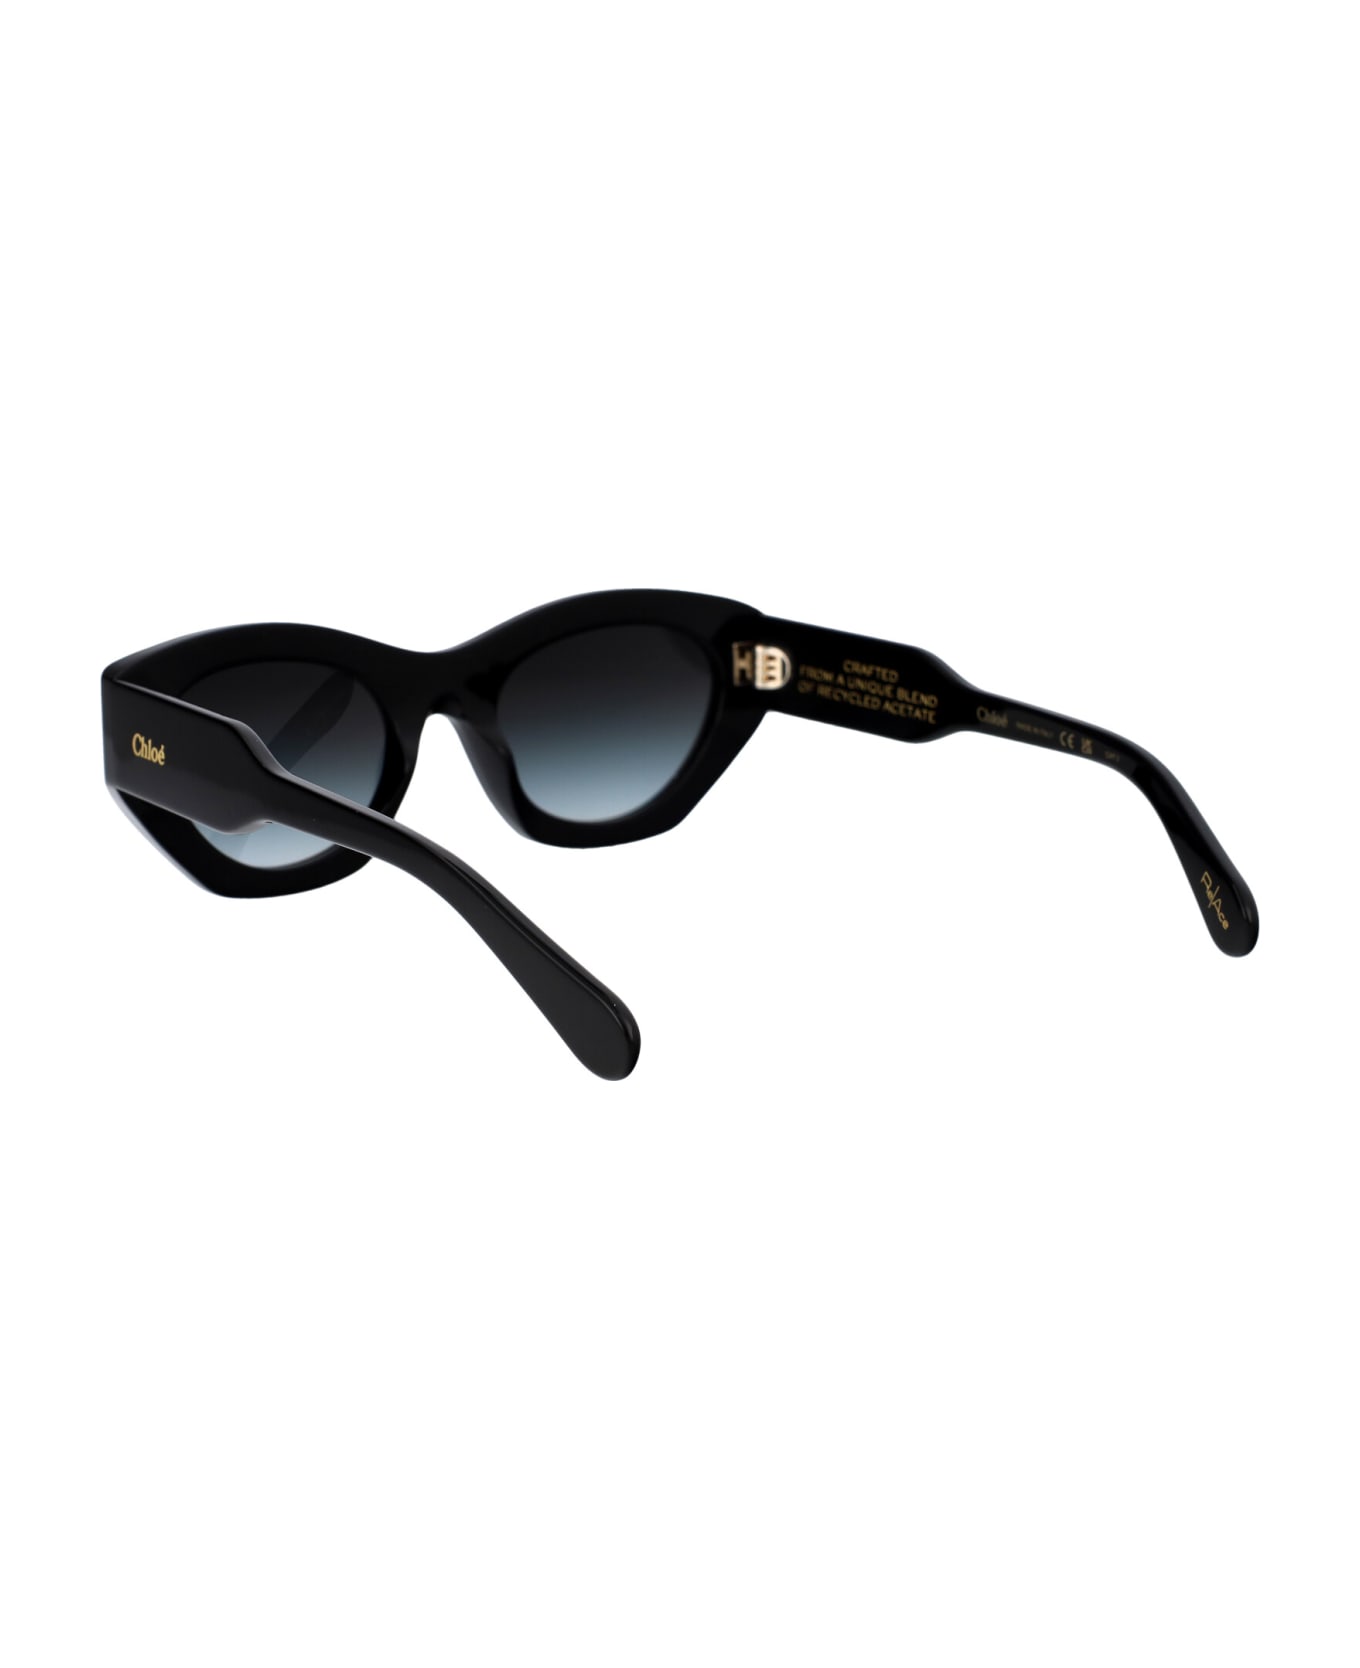 Chloé Eyewear Ch0220s Sunglasses - 001 BLACK BLACK GREY サングラス